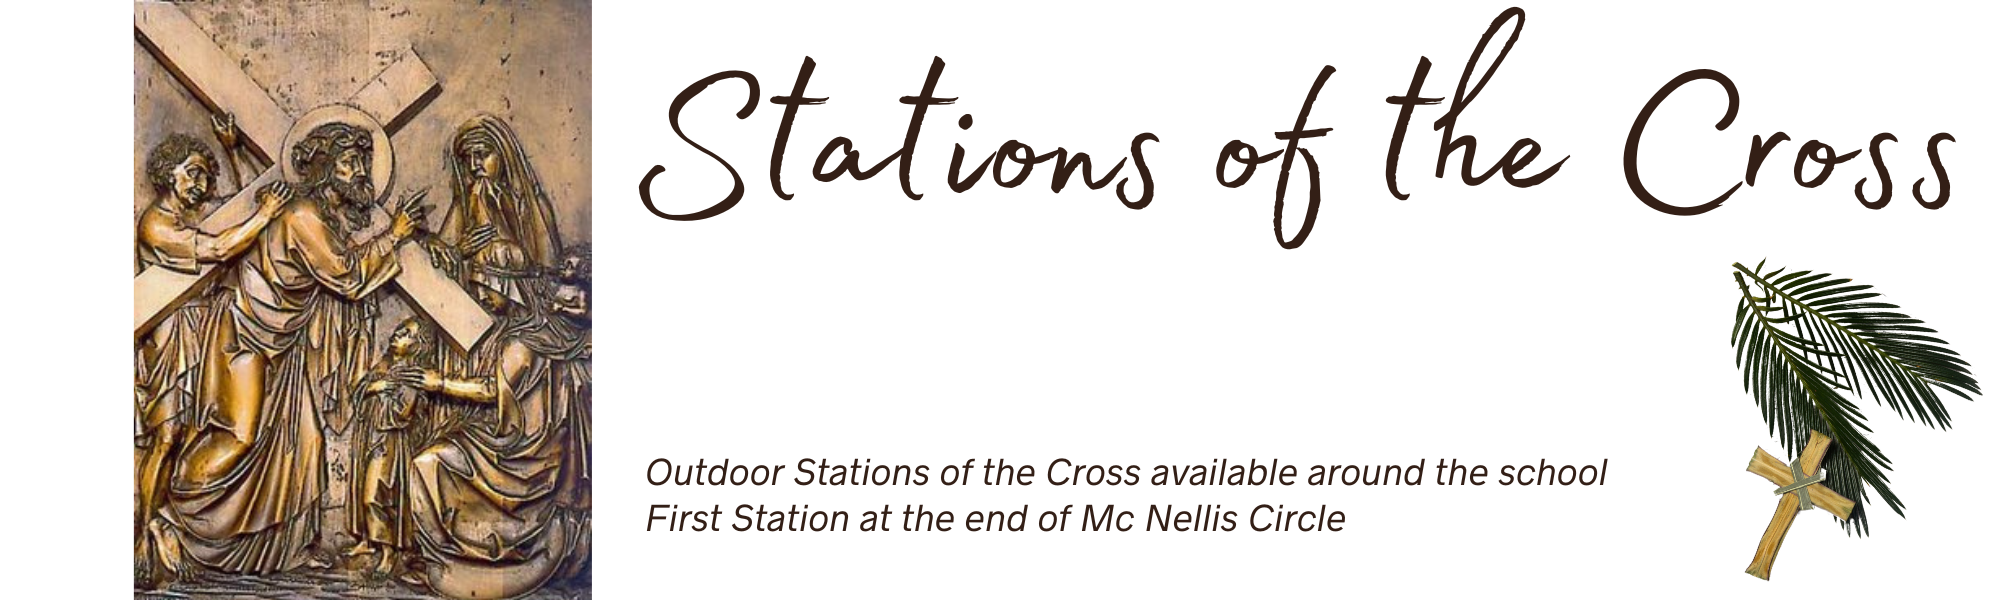 Stations of the Cross Fridays Feb 16- Mar 23